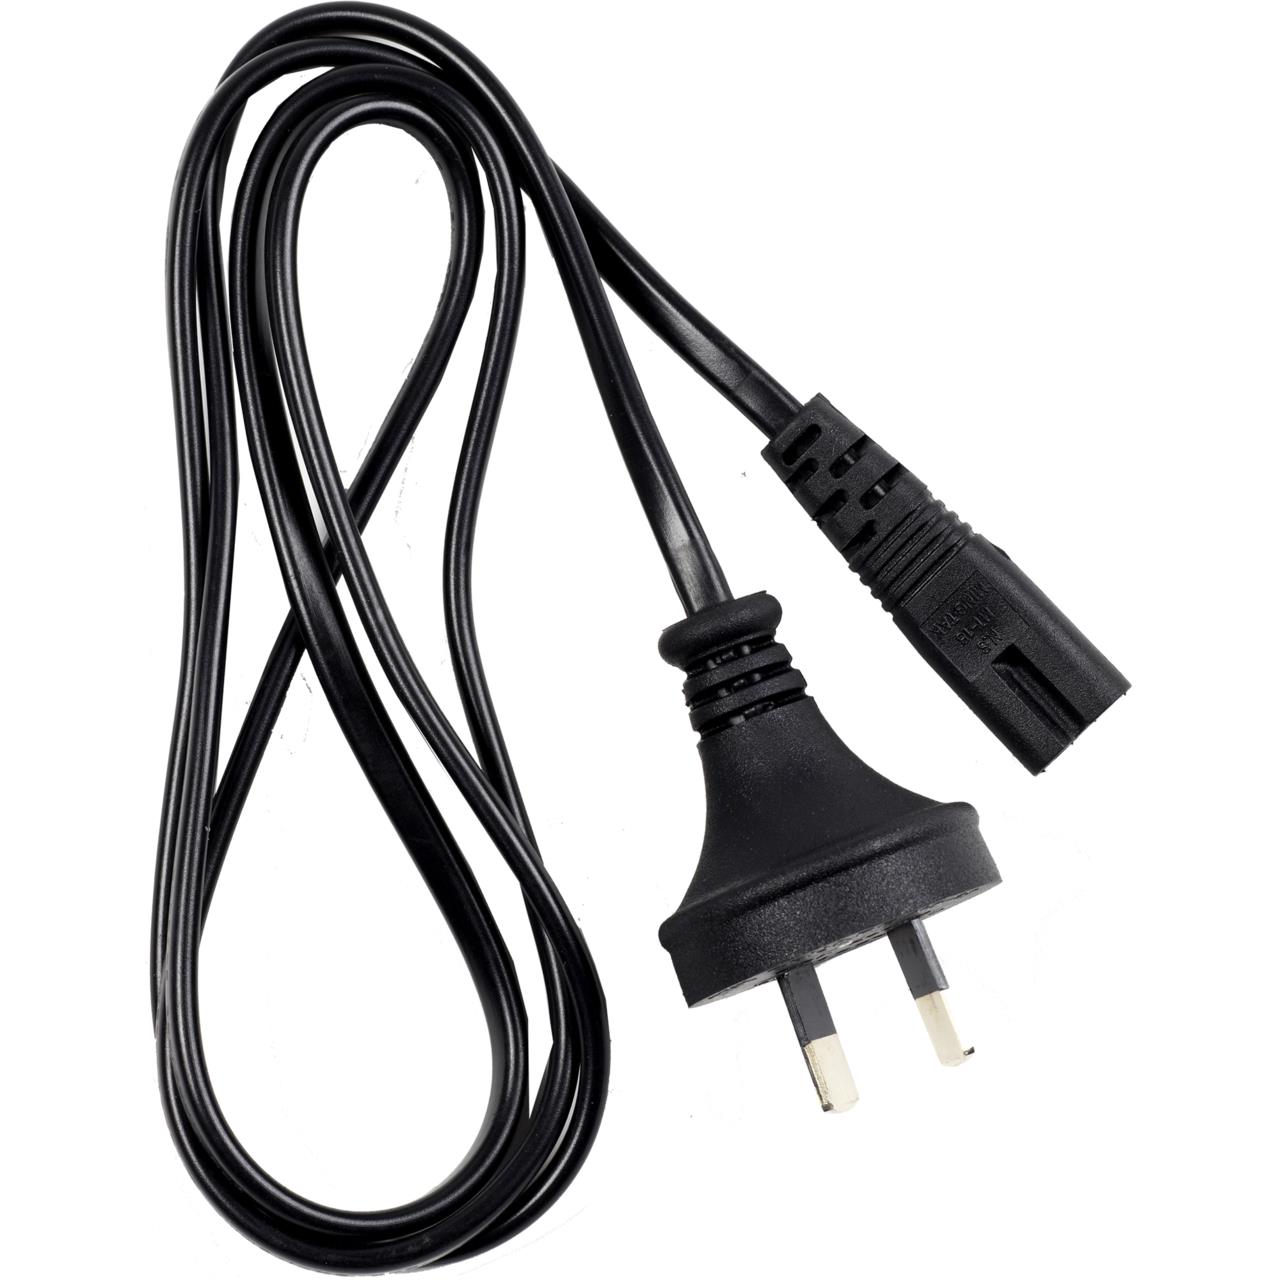 Buy Profoto Power Cable C7 online